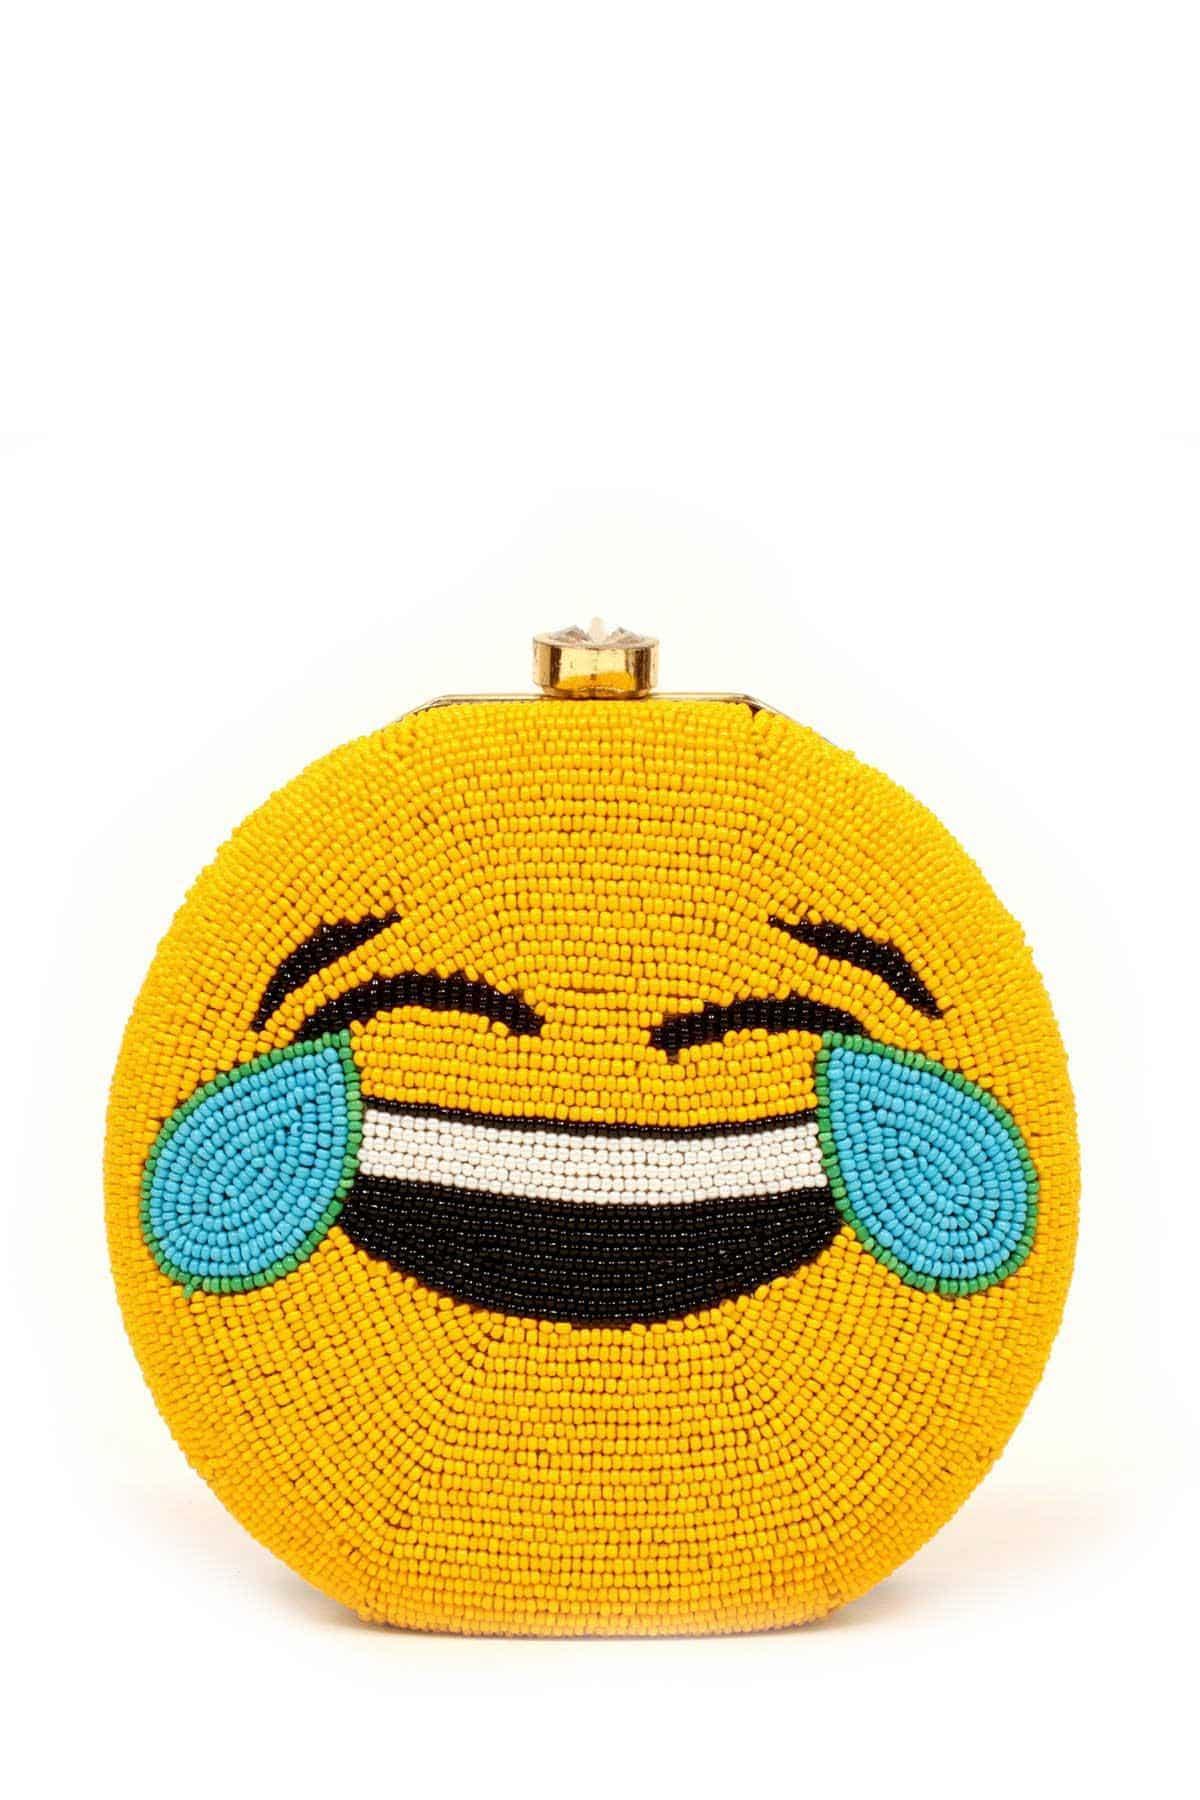 Smiley Face Zipper Pouches for Sale | Redbubble